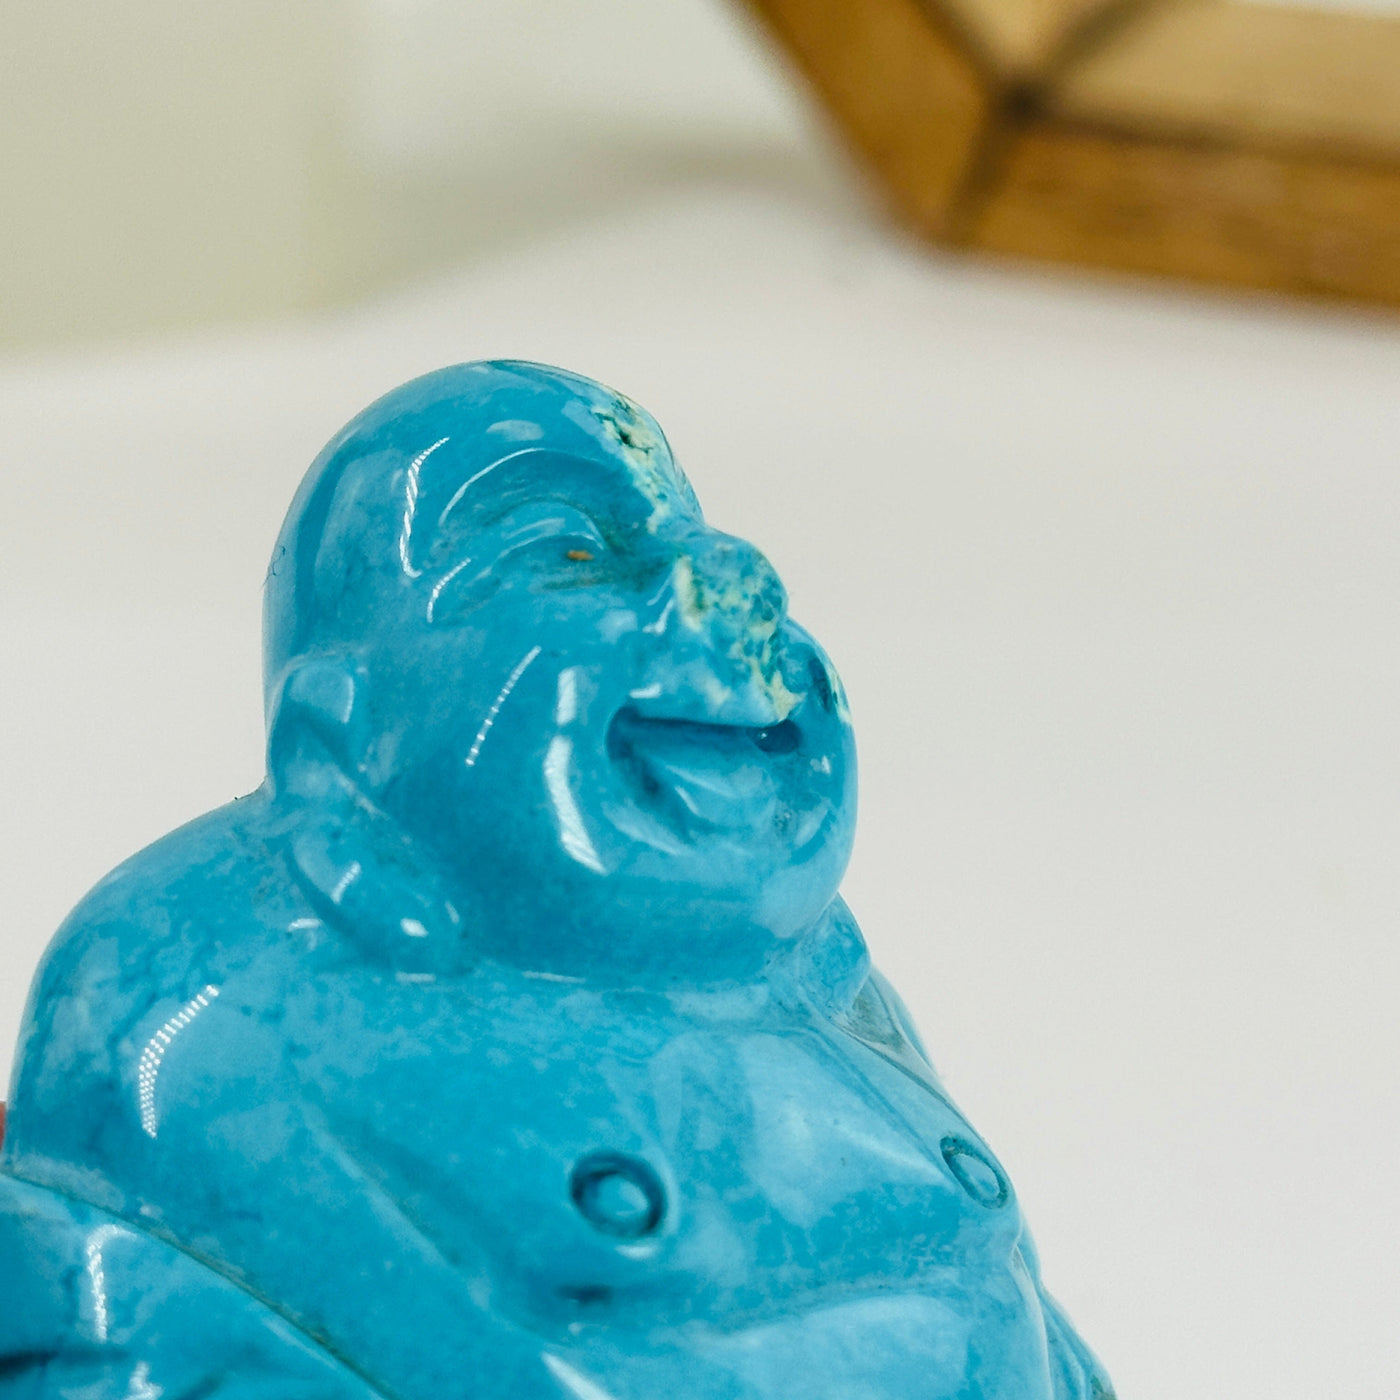 up close shot of chip on buddha statue